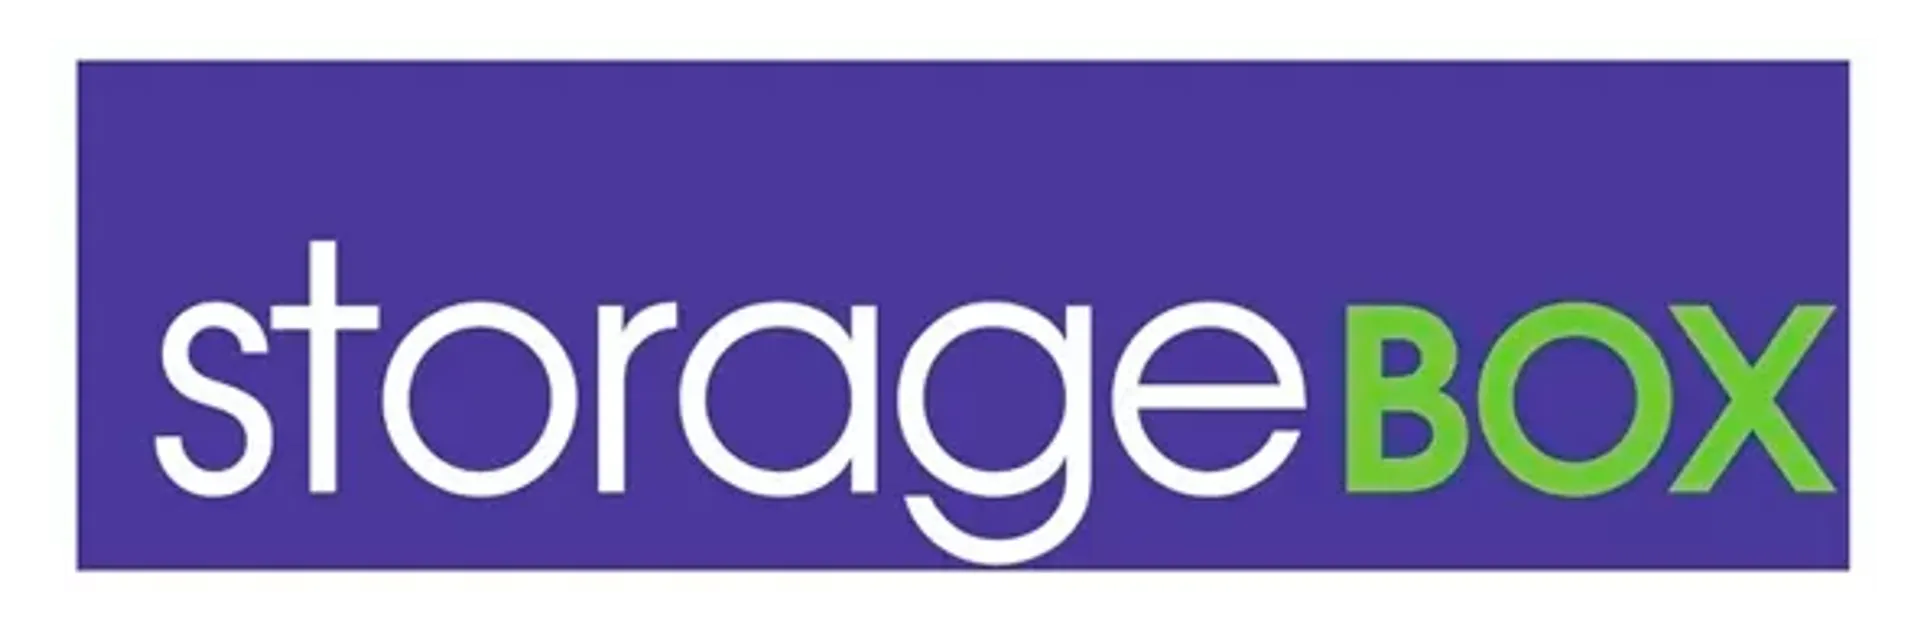 STORAGE BOX logo current weekly ad